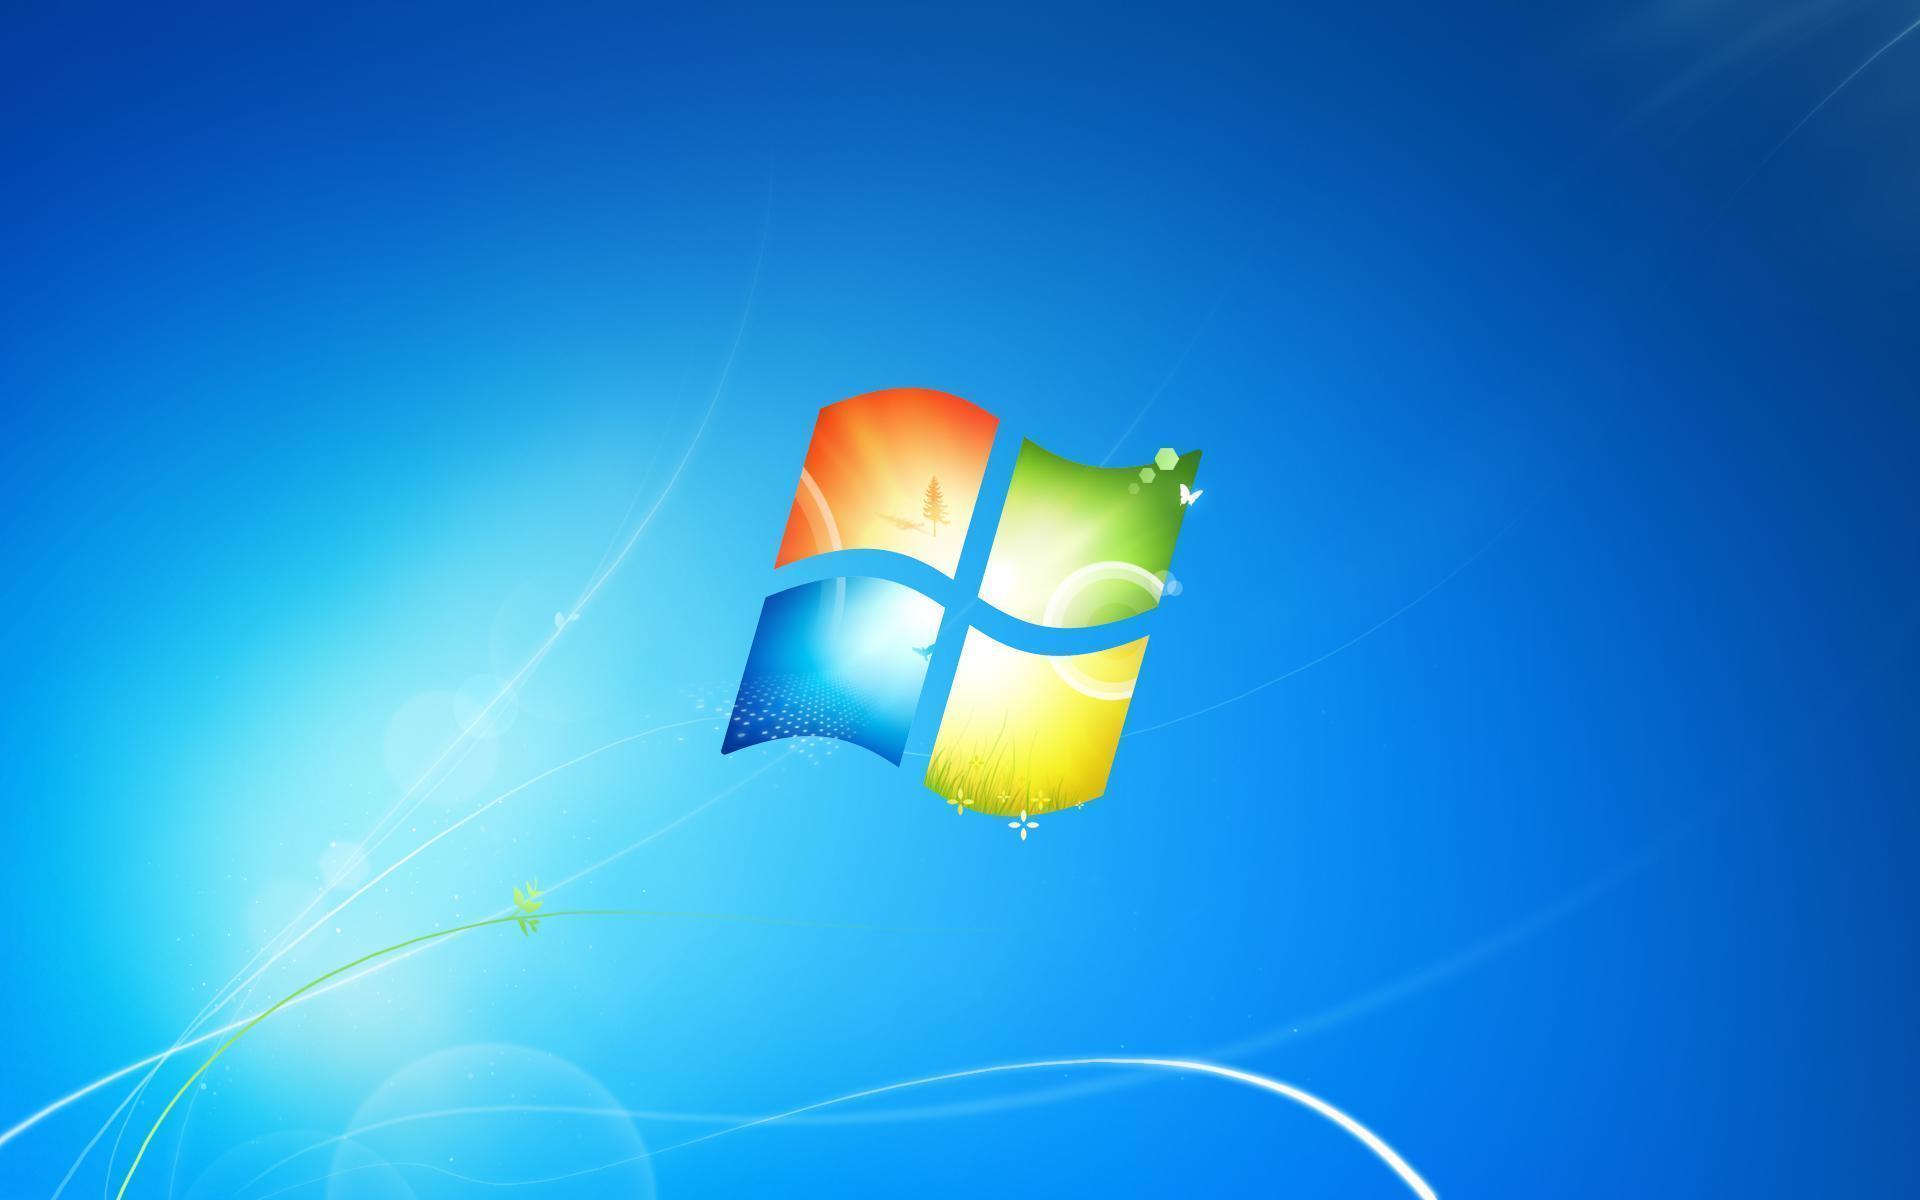 Windows 7 has a new default wallpaper and logo